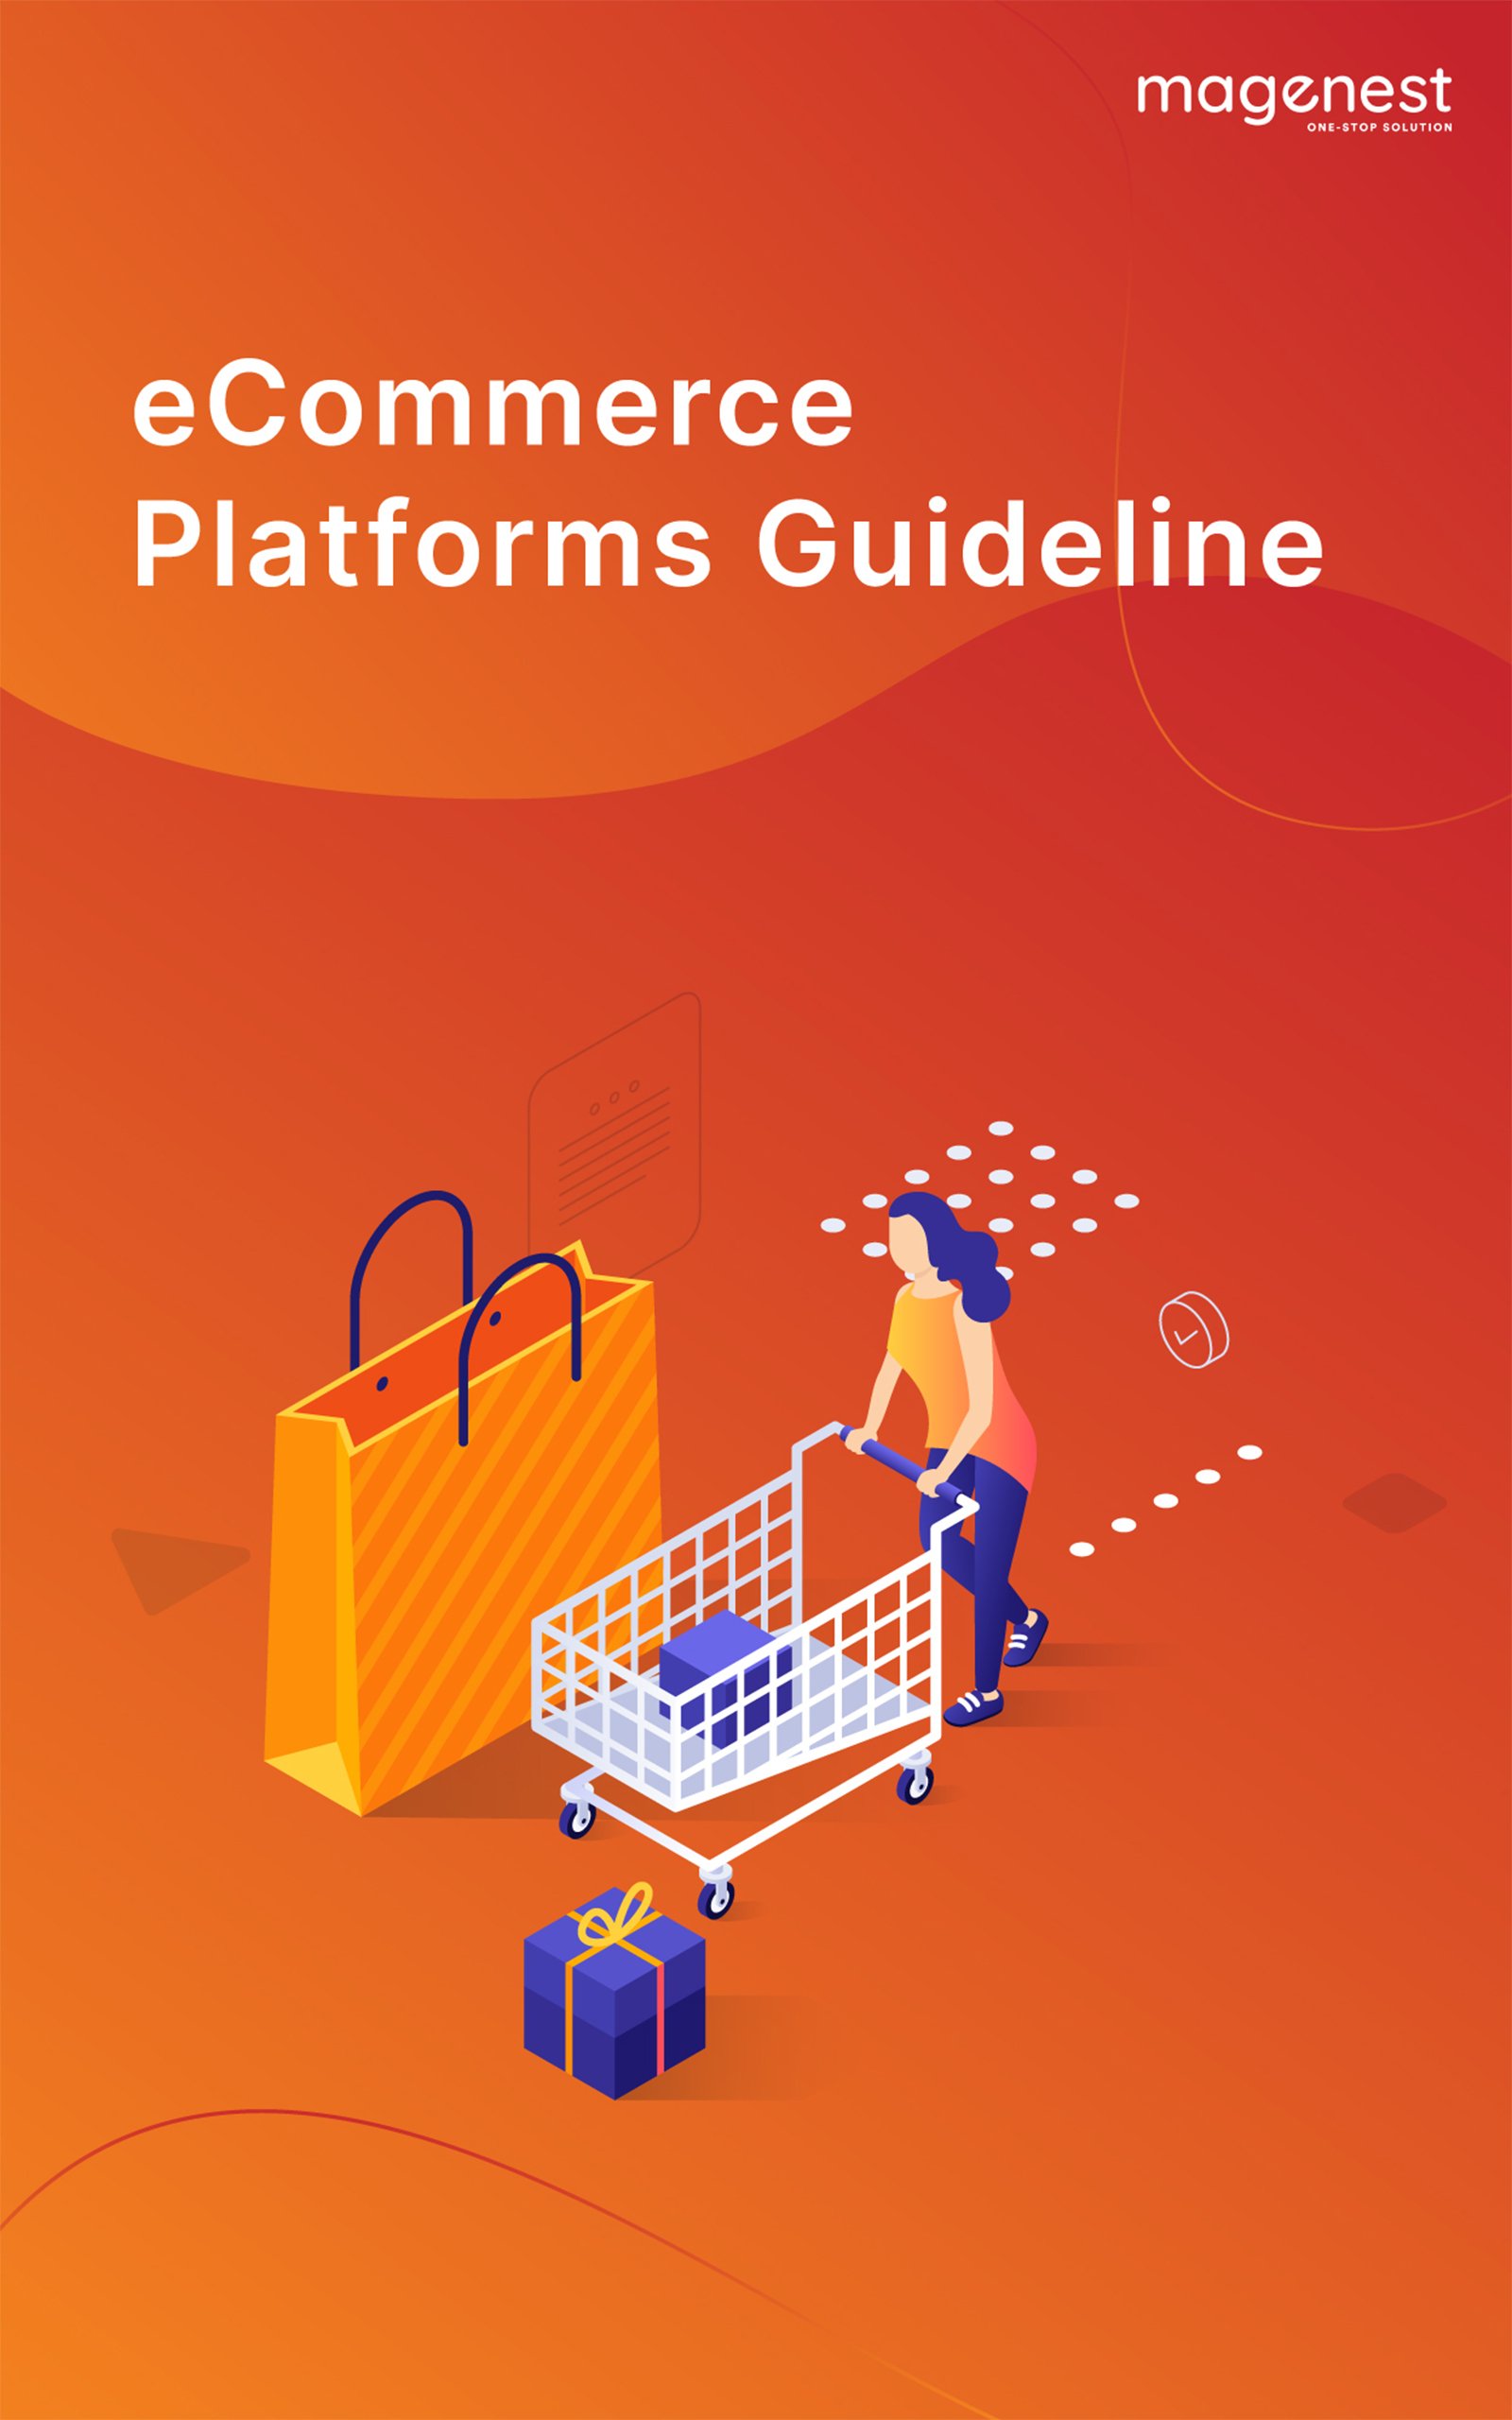 eBook: eCommerce Platforms Guideline – A Detailed Comparison0